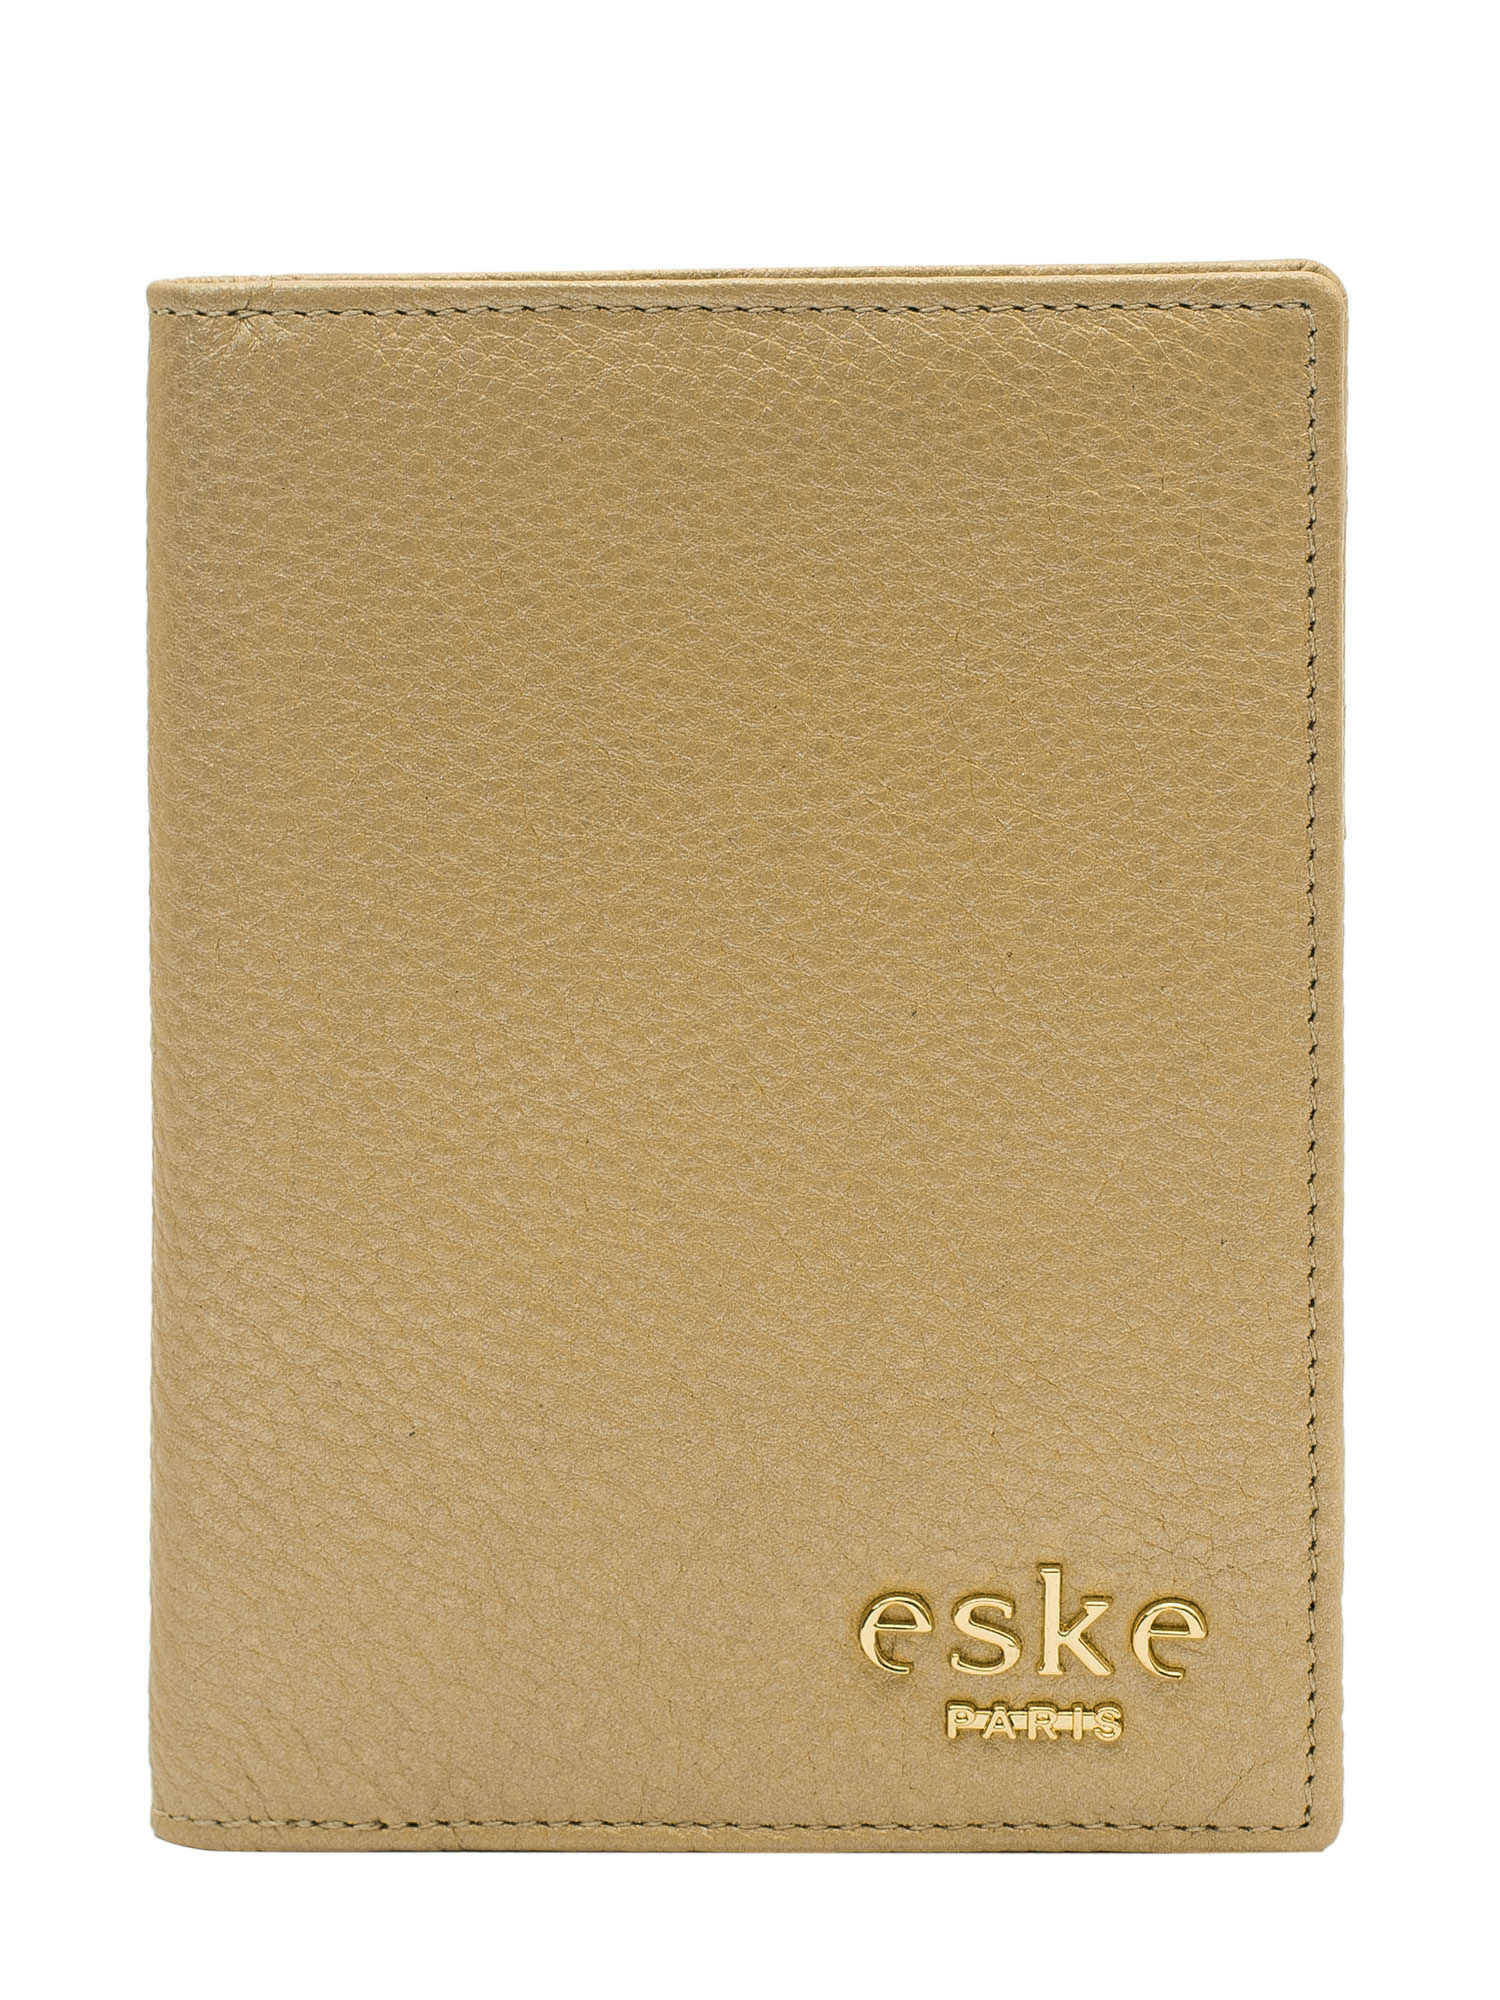 Eske Paris Mabel Leather Passport Case,Gold